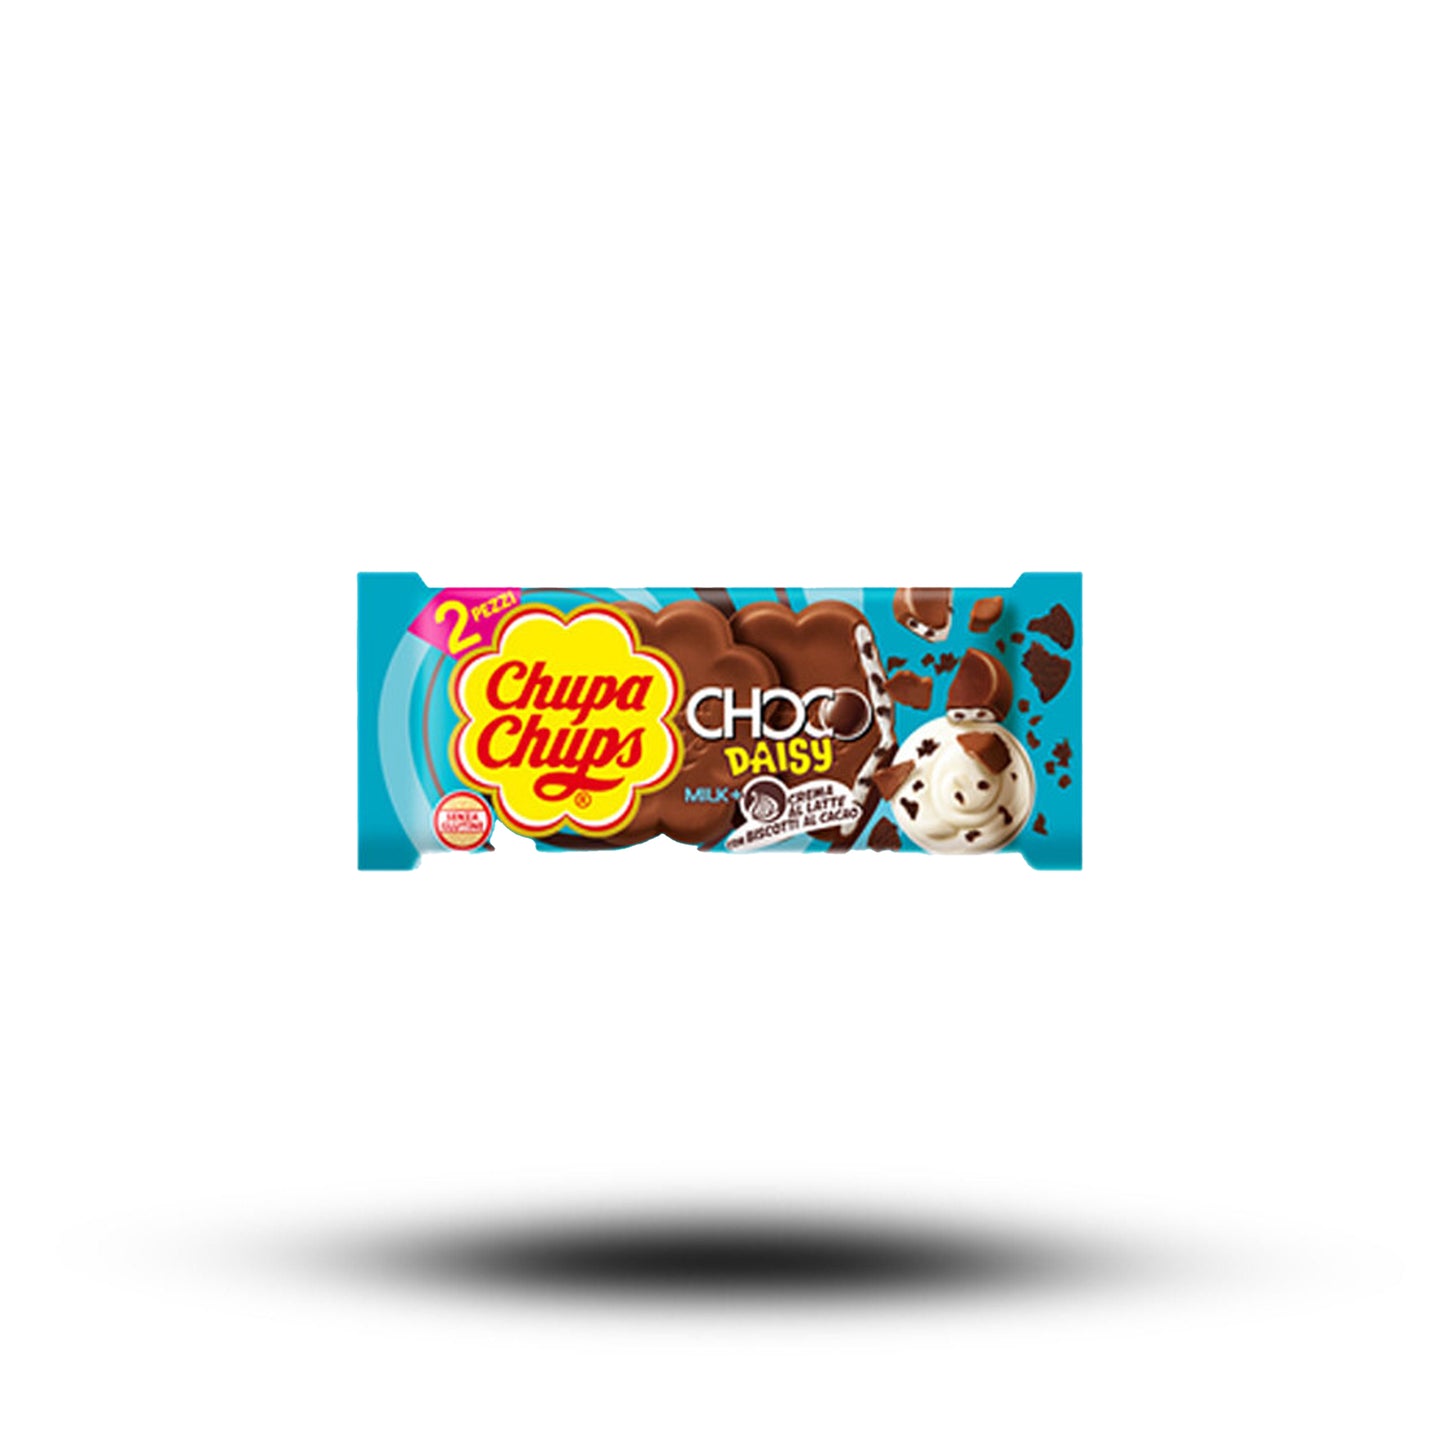 Chupa Chups Choco Daisy Creama Biscotti 32g